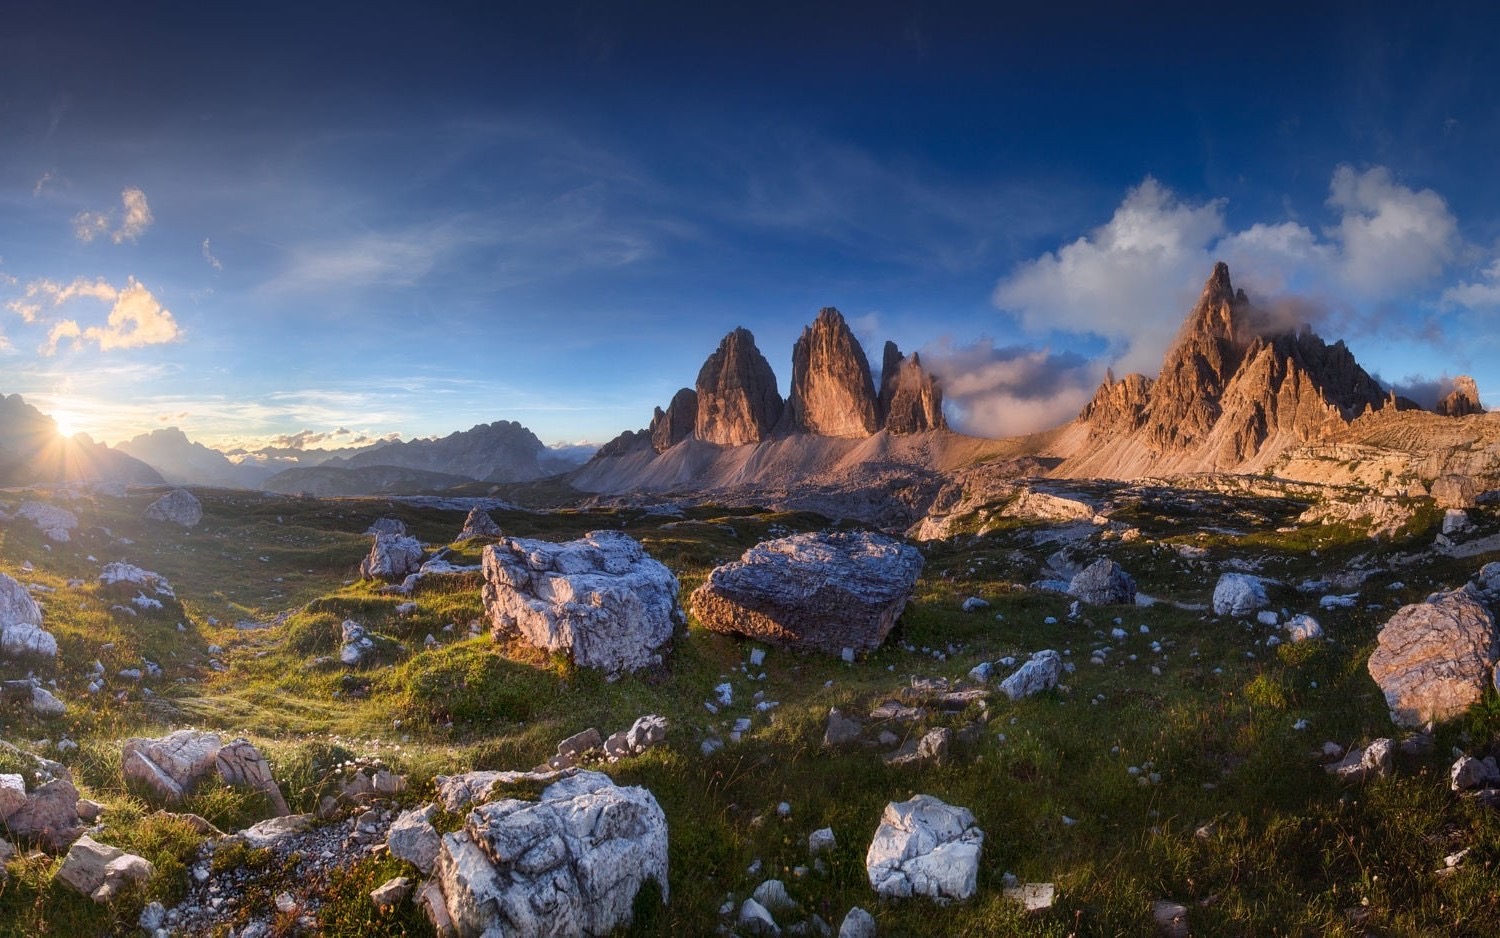 General 1500x938 landscape mountains rocks nature Dolomites grass clouds sunlight